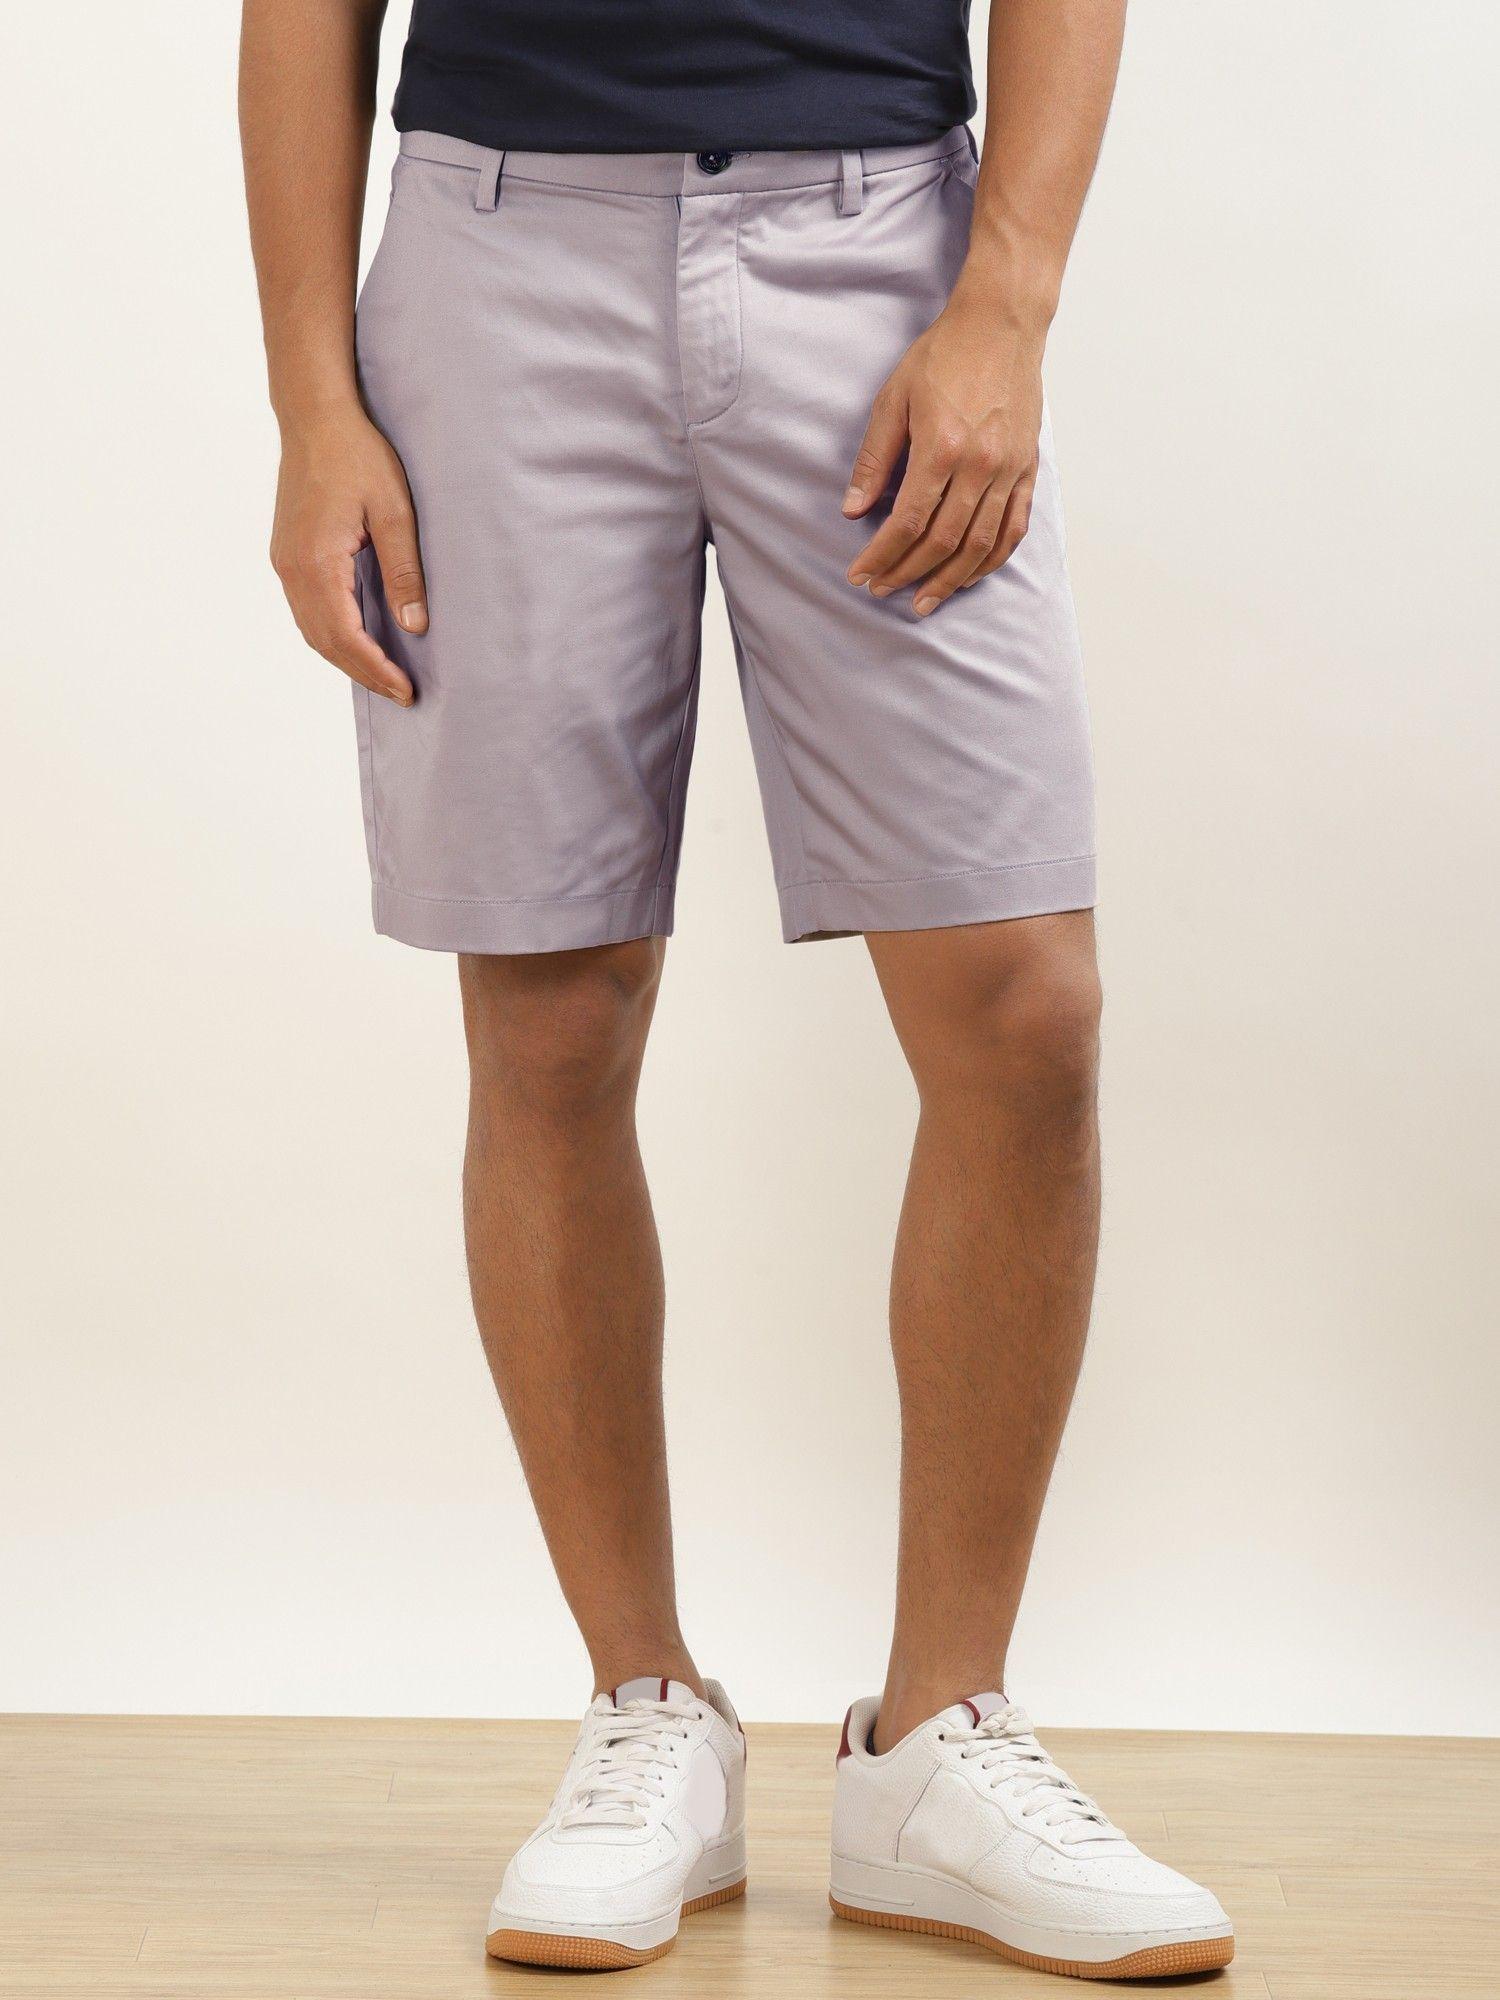 grey men's casual shorts